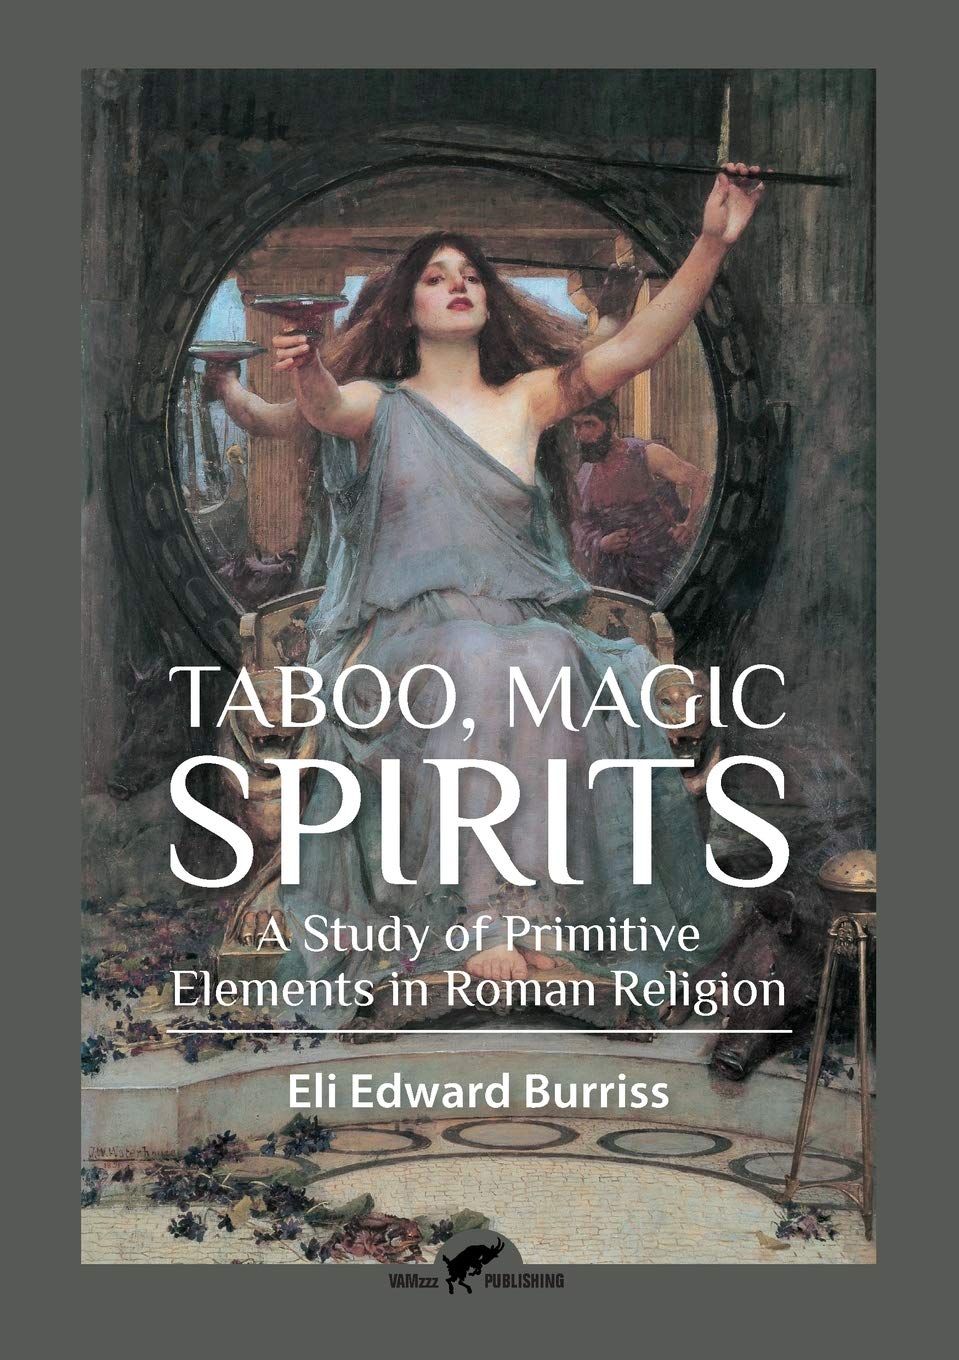 Taboo, Magic, Spirits: A Study of Primitive Elements in Roman Religion, by Eli Edward Burriss